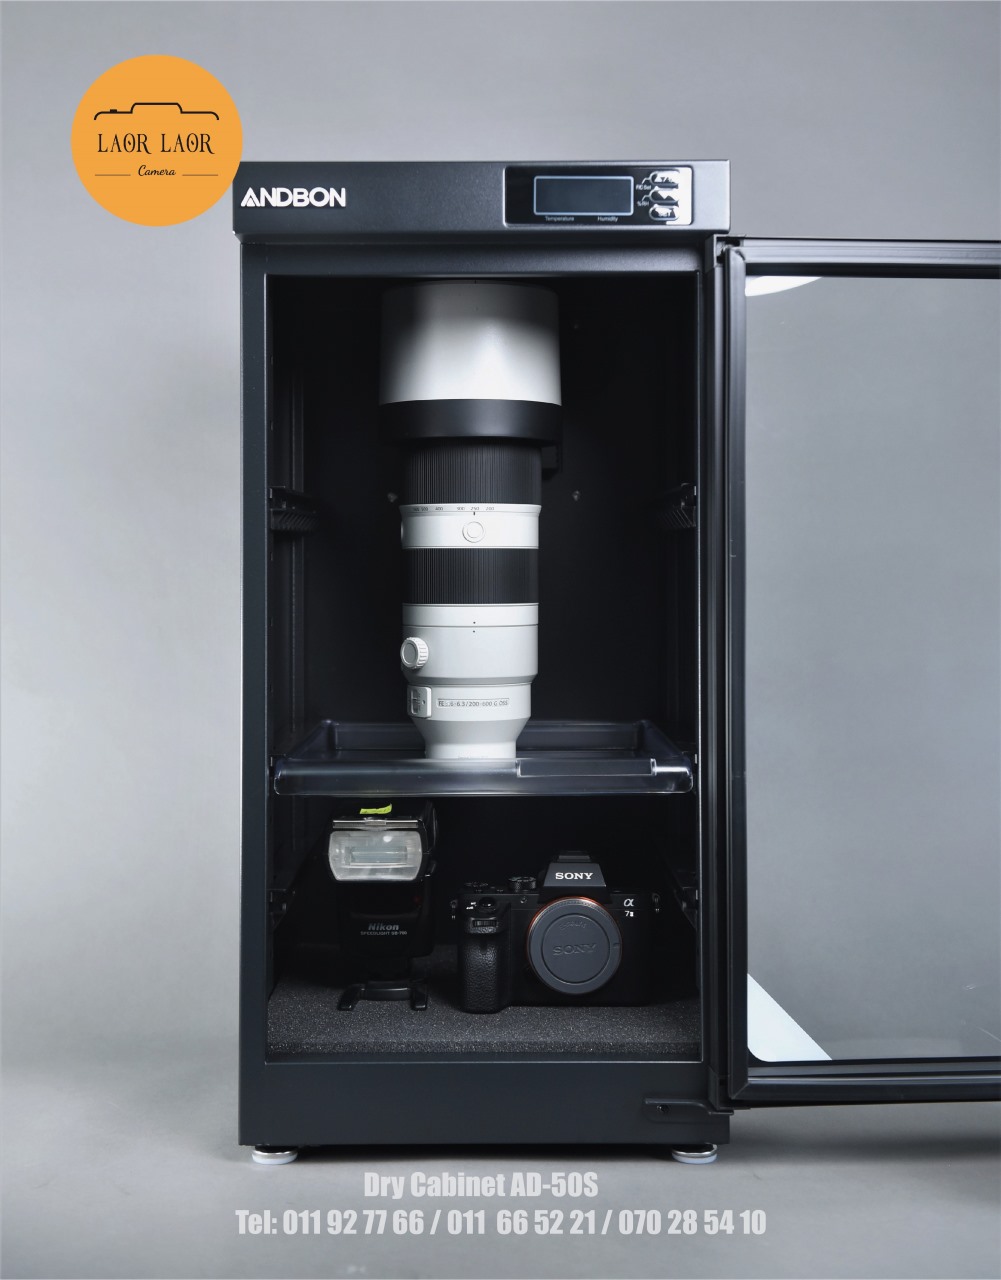 ANDBON AD-50S Dry Cabinet